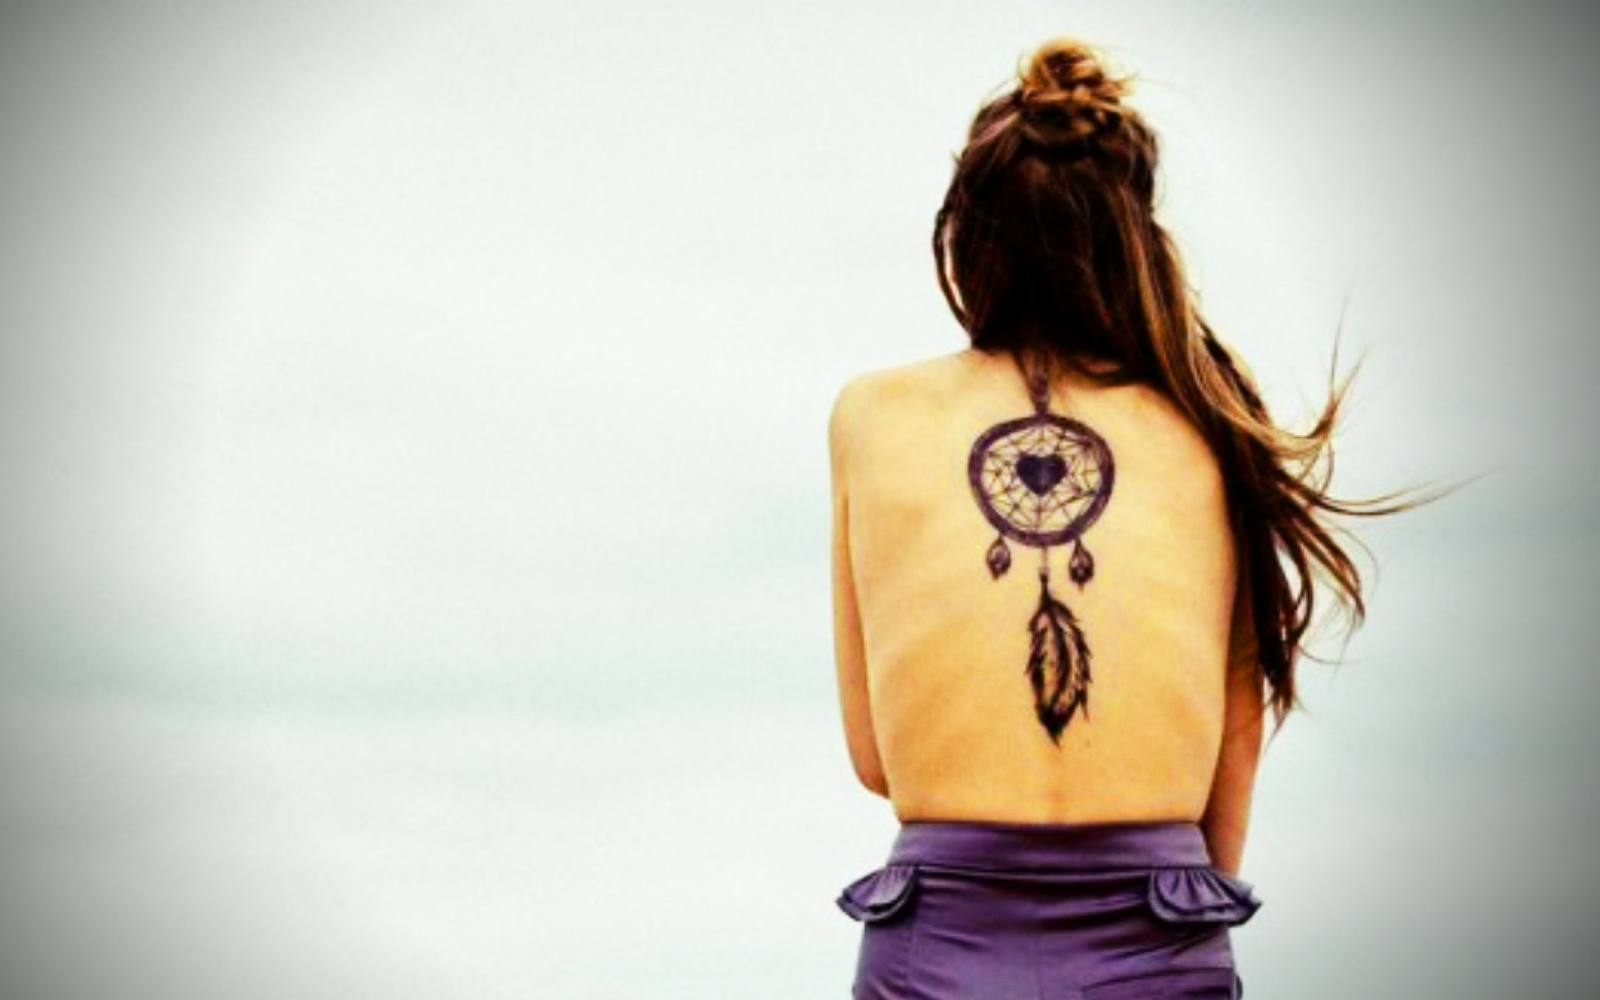 dreamcatcher tattoos on back tumblr